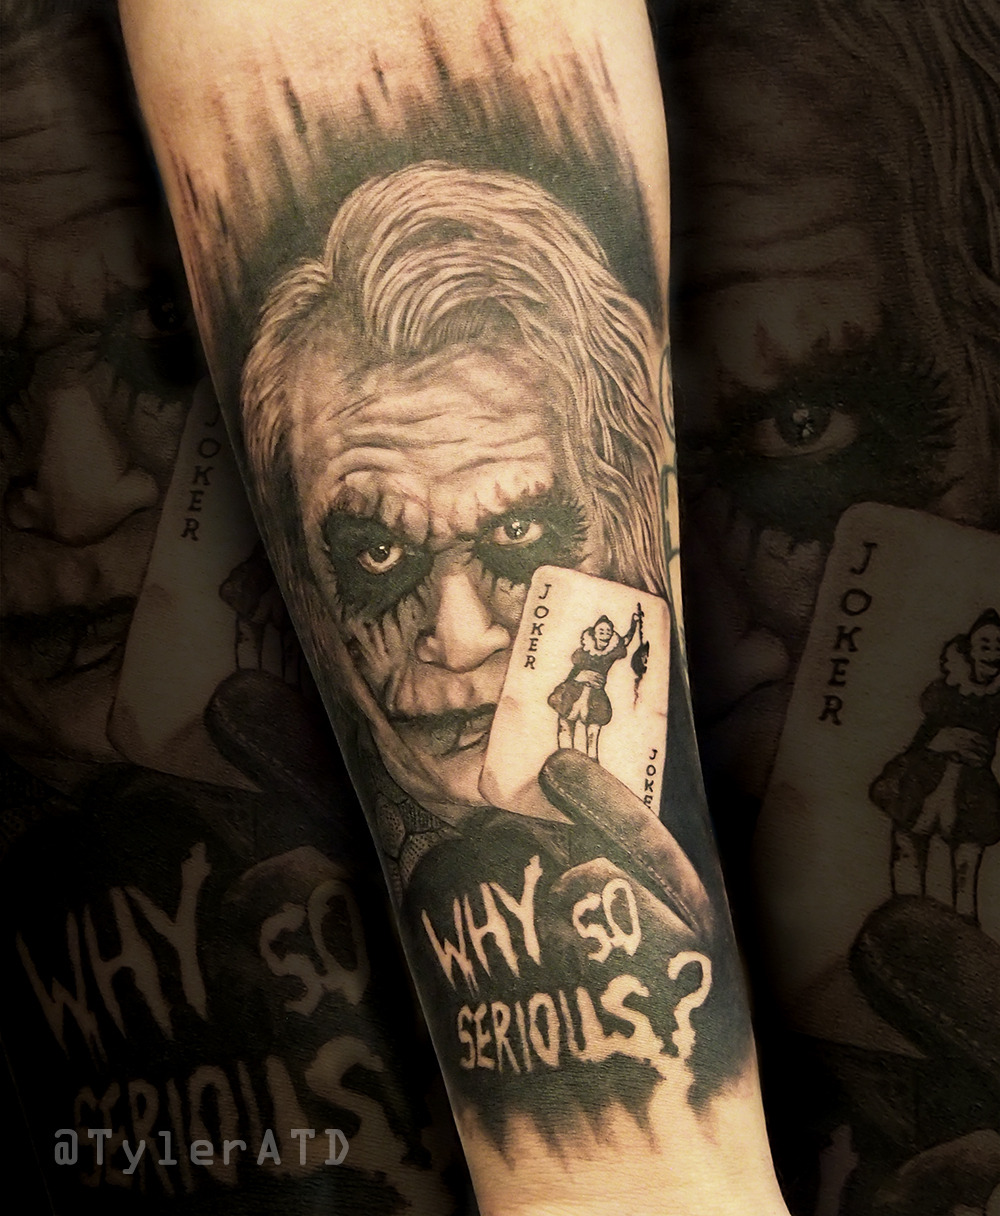 Iconic Movie Tattoos Permanent Celebrations of Heath Ledgers Joker